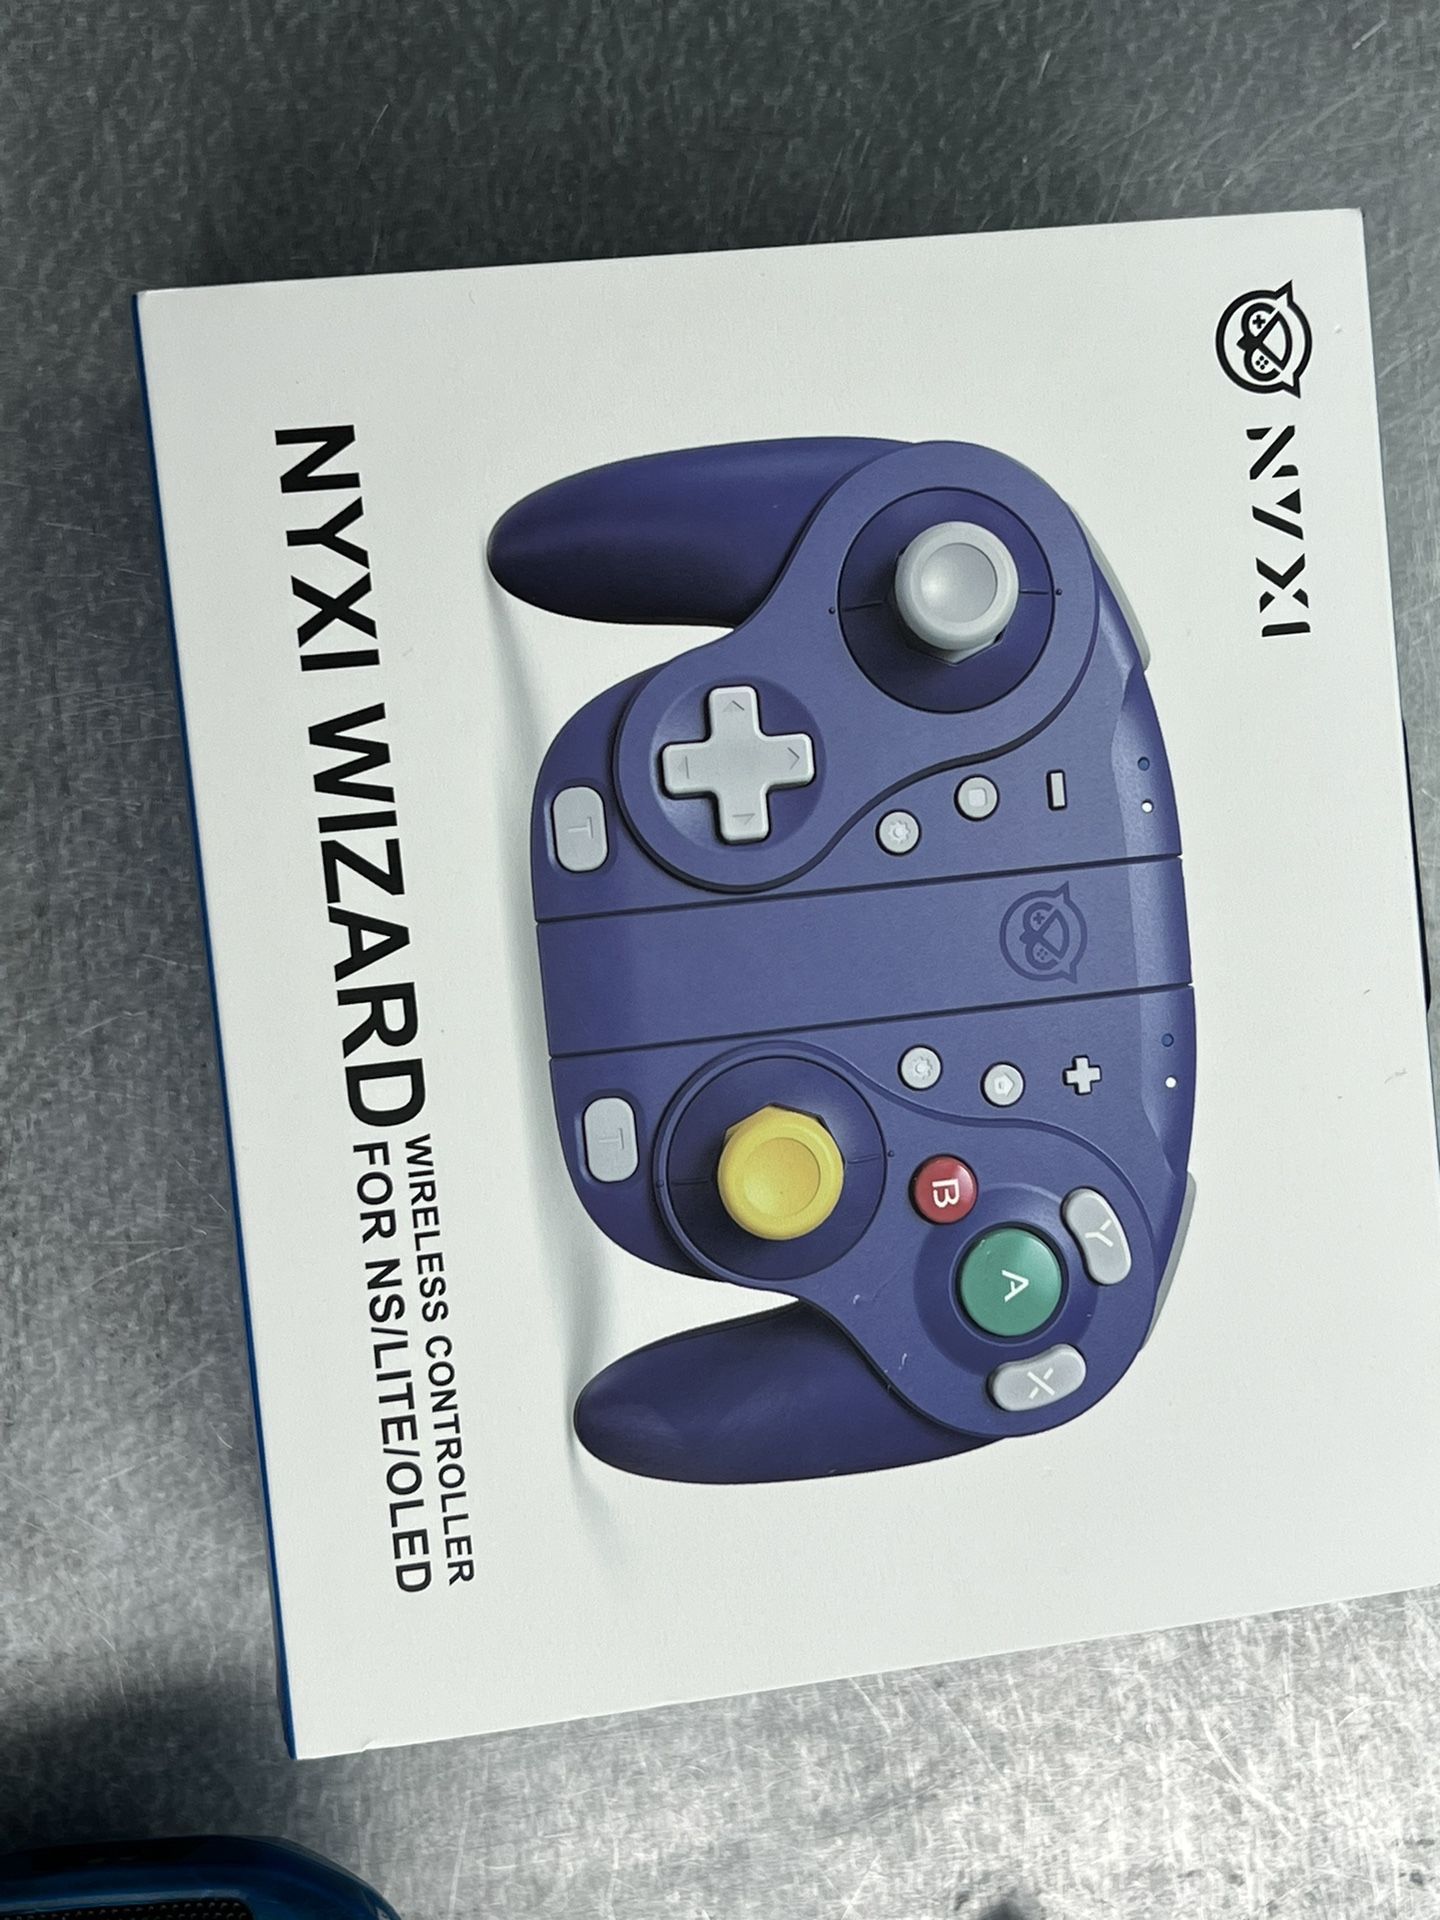 NYXI Wizard control for Nintendo switch.